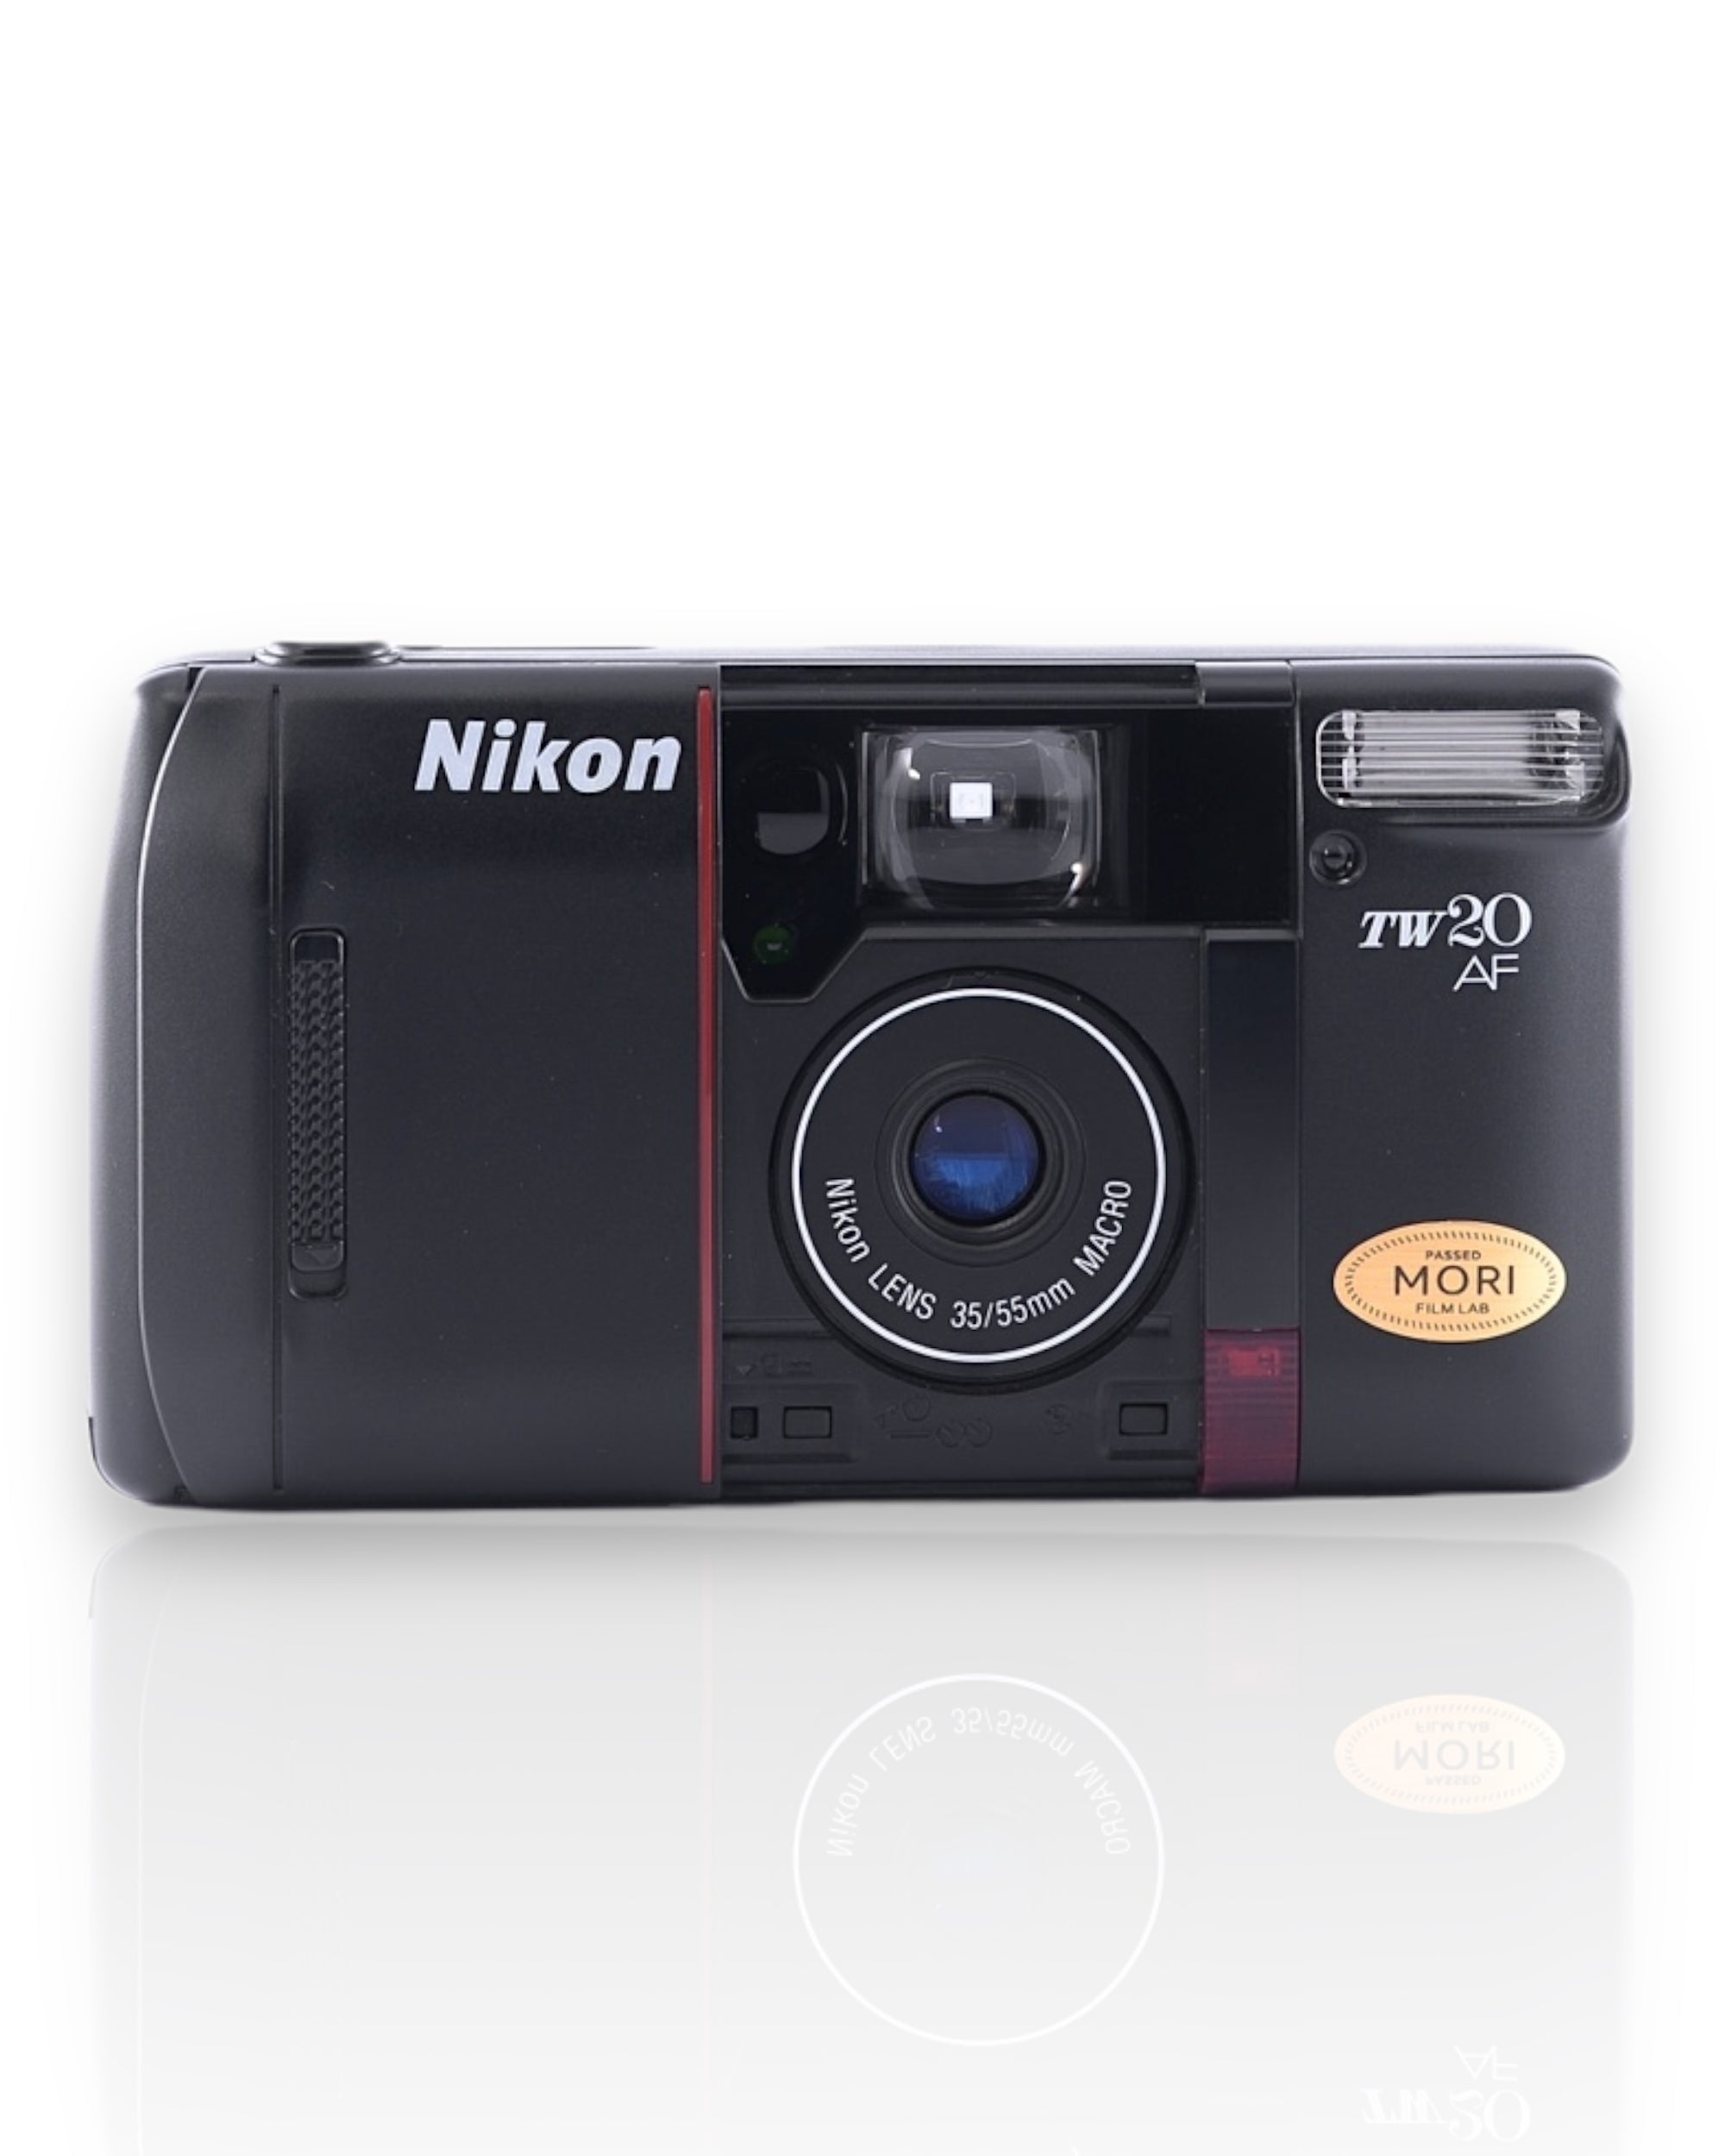 Nikon TW20 AF 35mm Point & Shoot film camera with dual 35/55mm lens